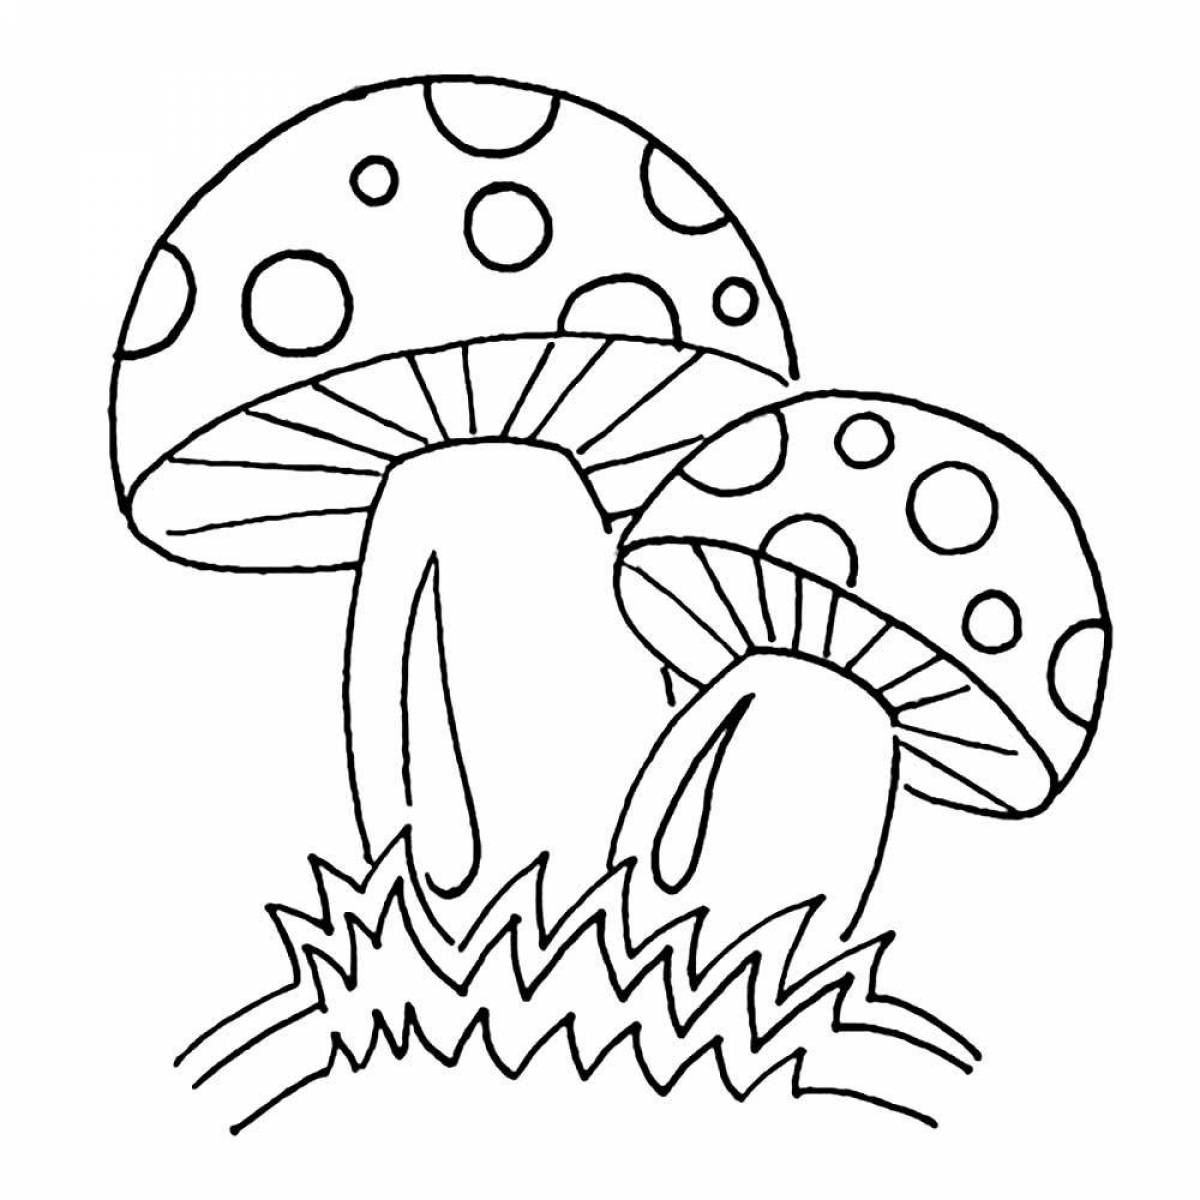 Fun mushroom coloring